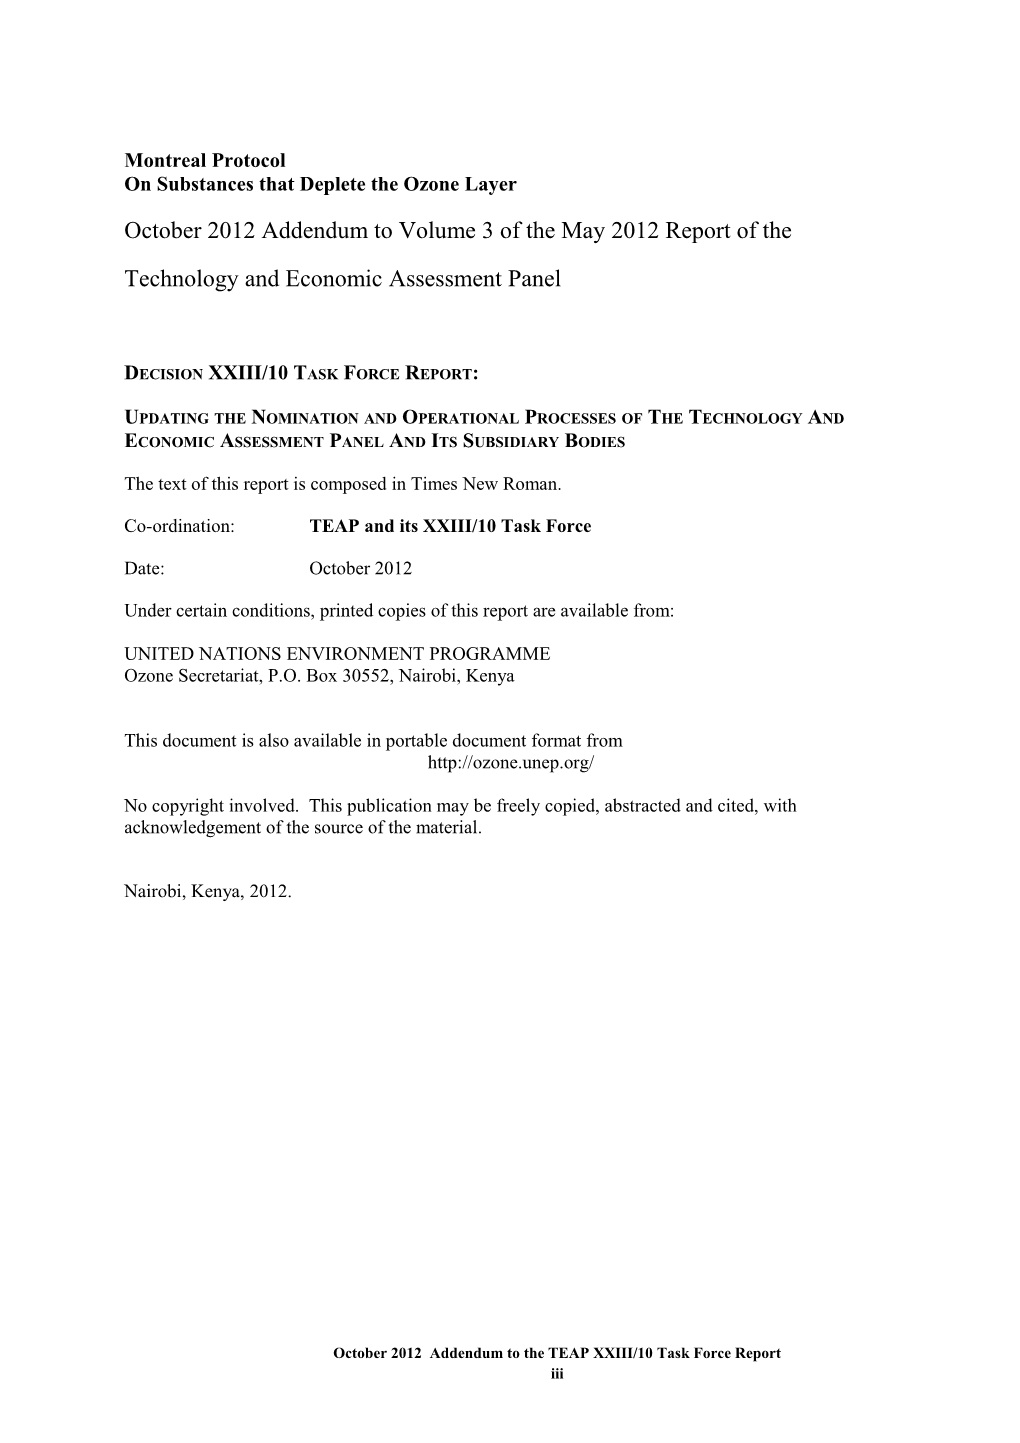 Addendum to TEAP May 2012 Decision XXIII/10 Task Force Report (Vol. 3)